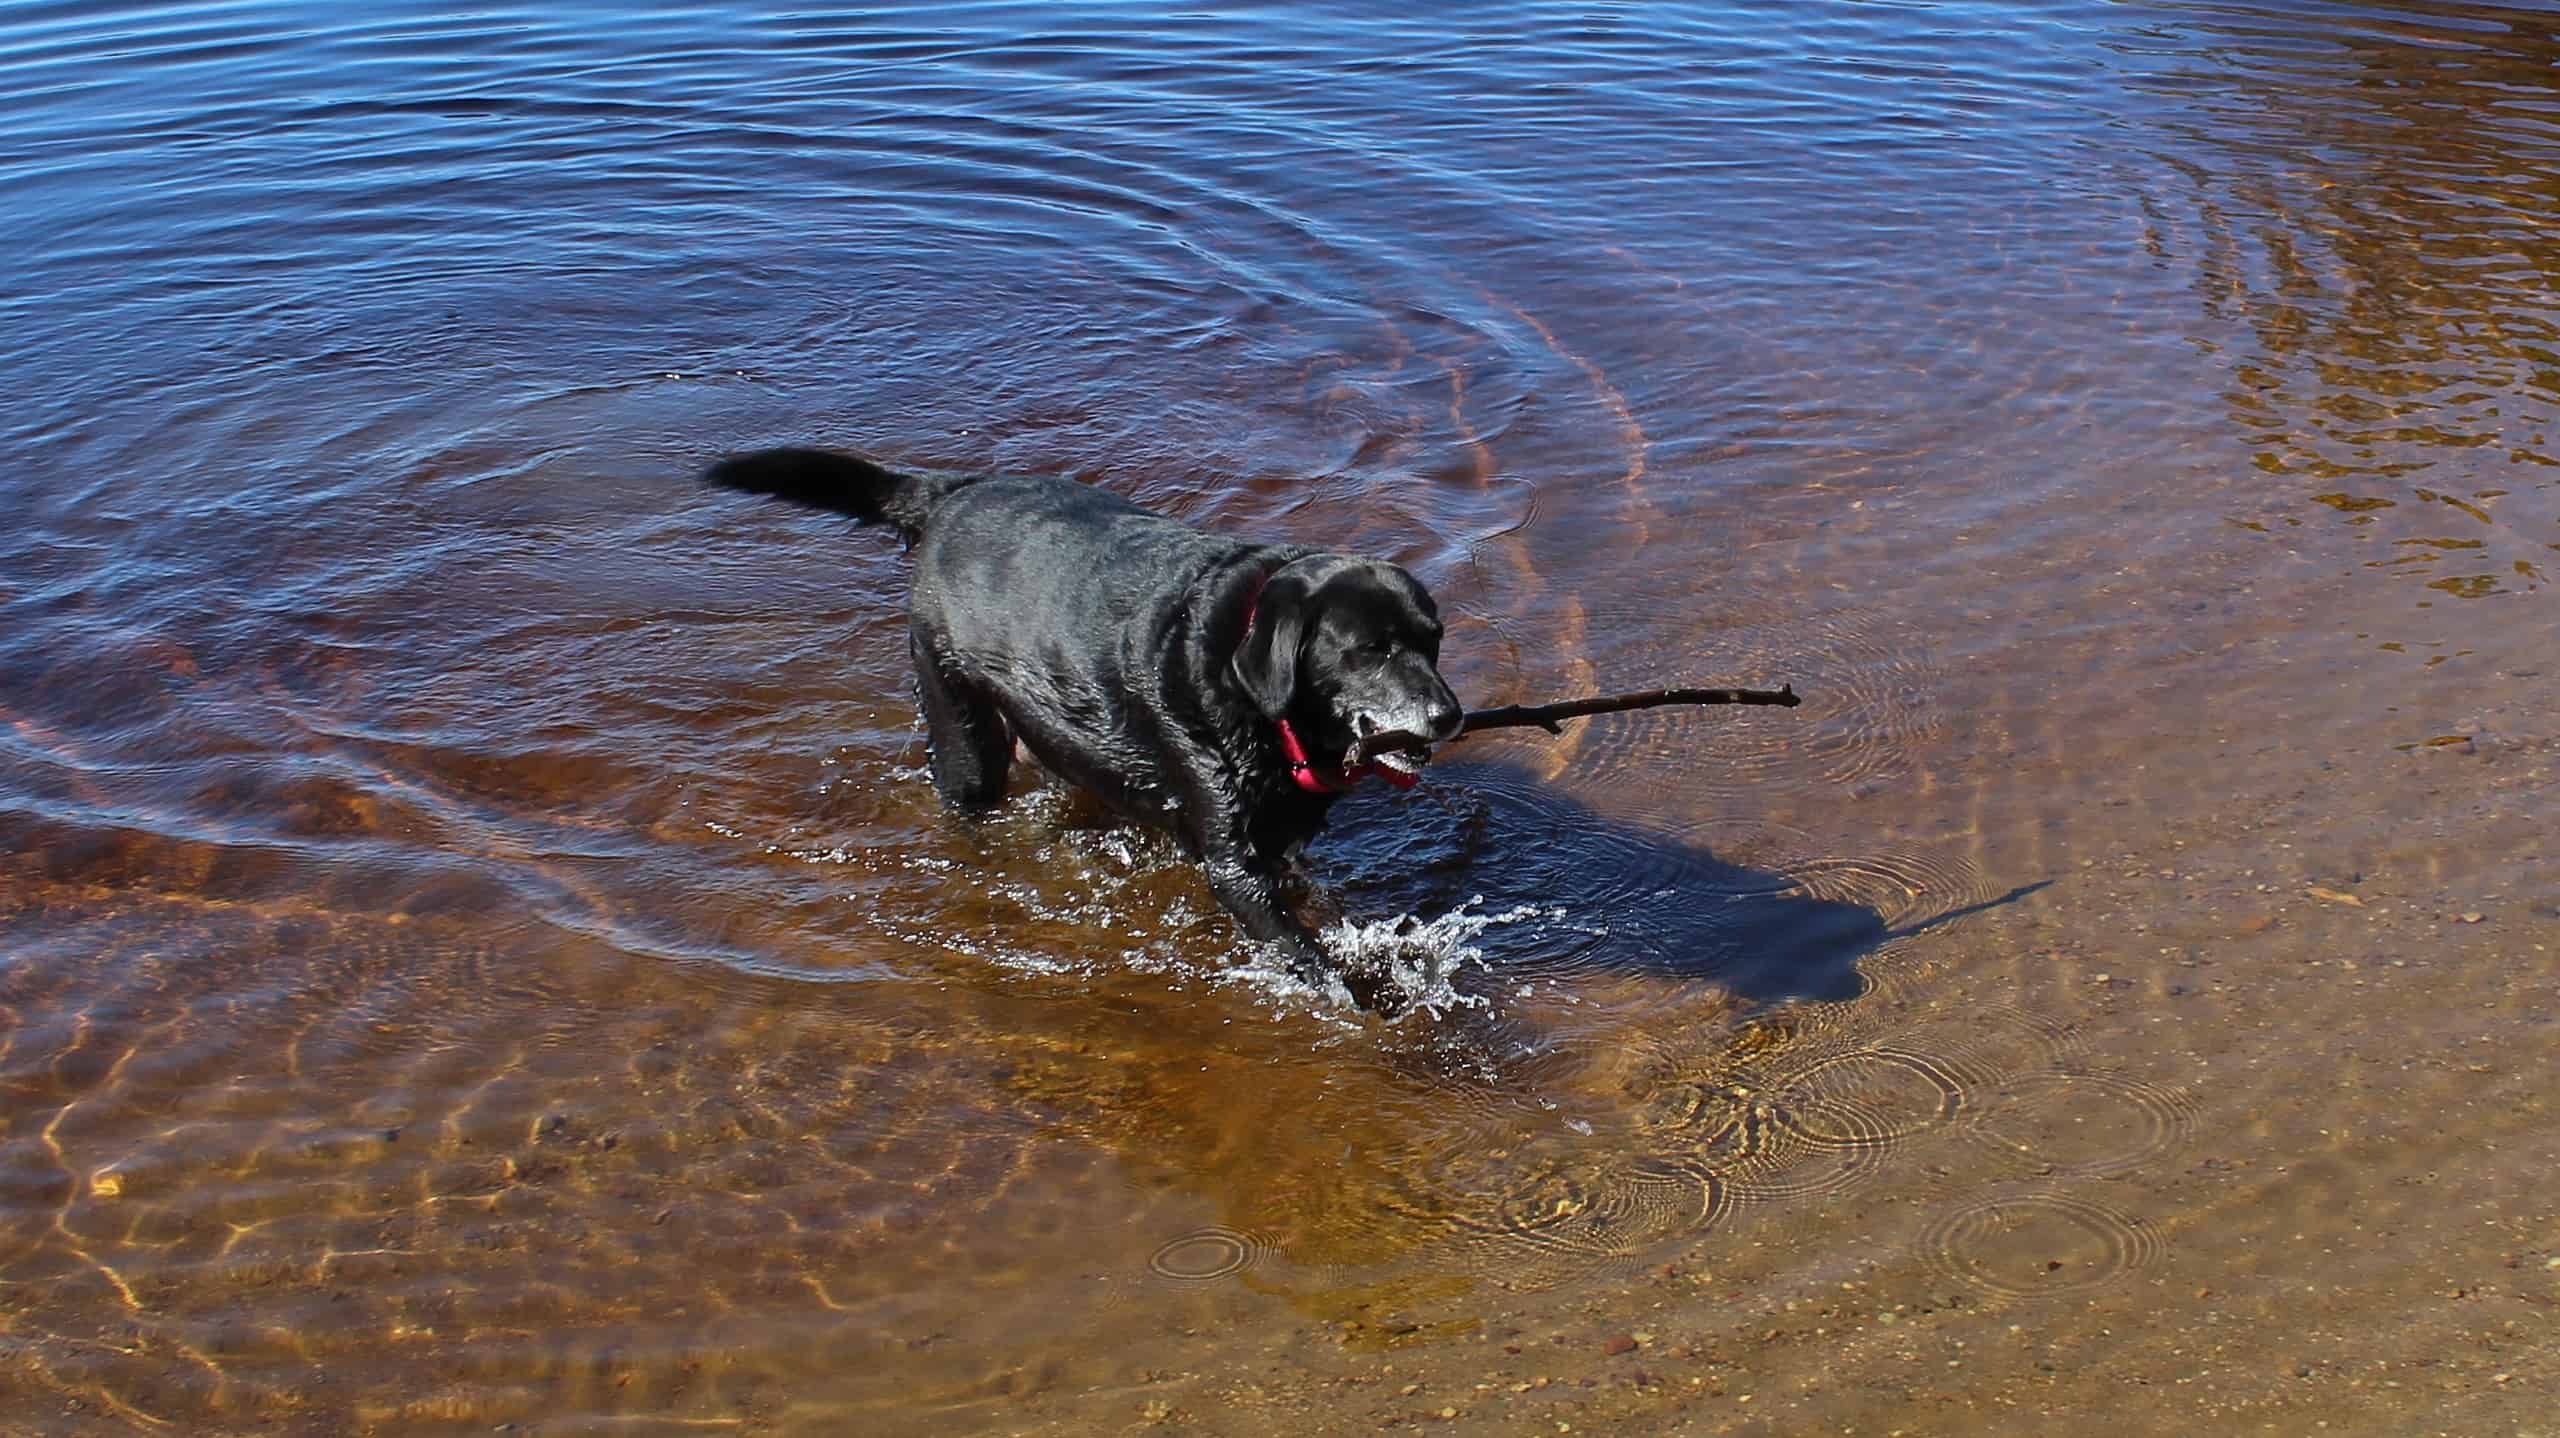 Canadian Labrador Retriever, or St. John's Water Dog